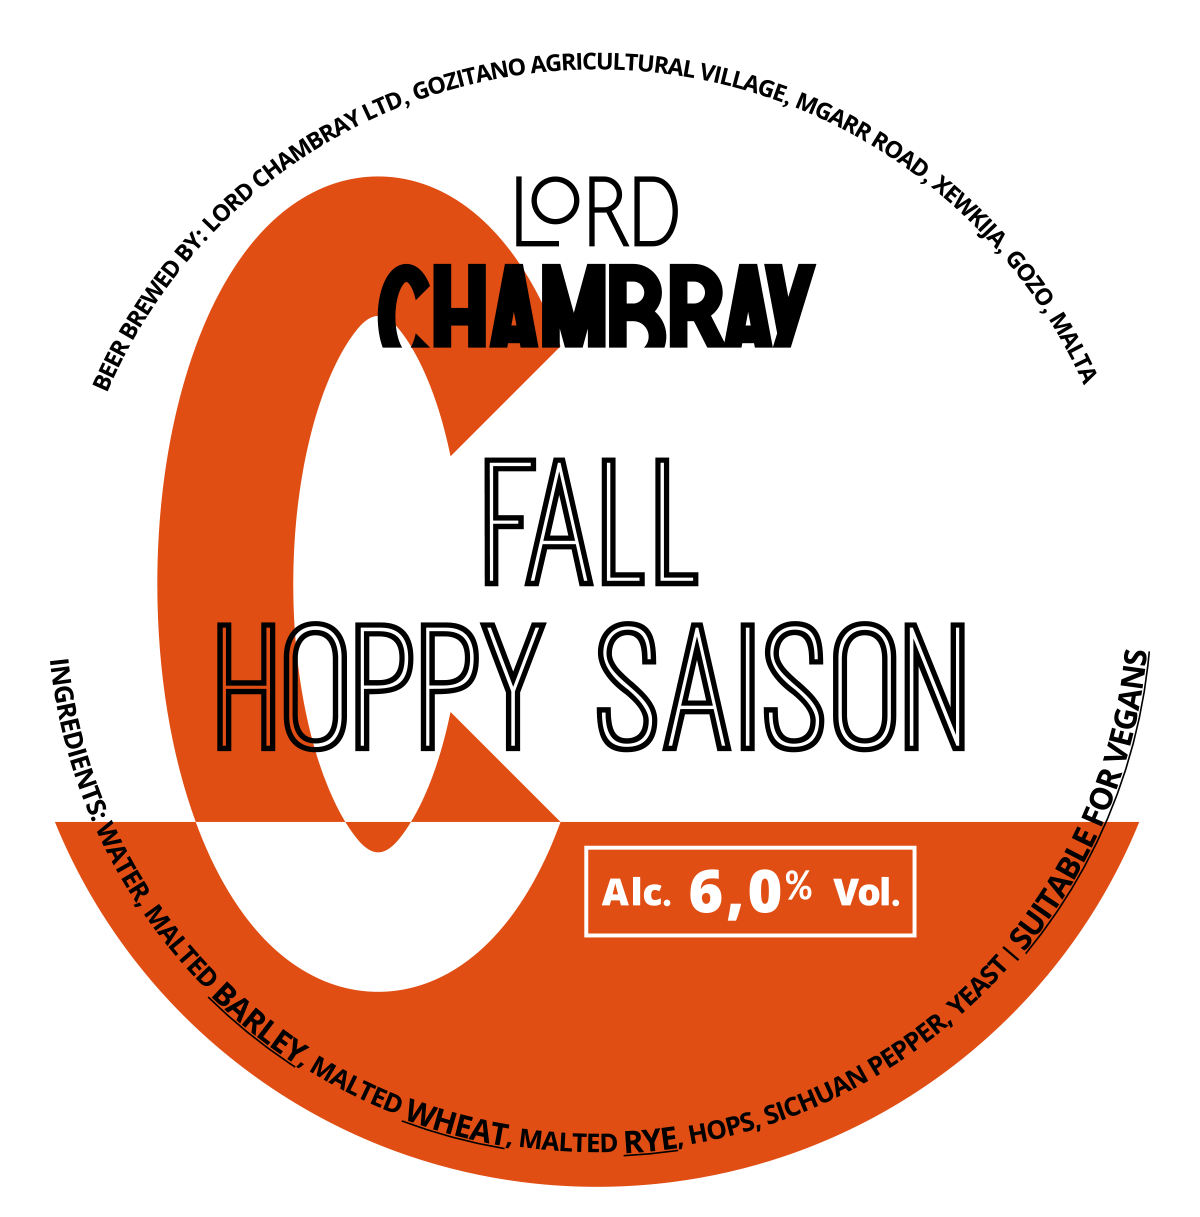 Lord Chambray – Craft Beer from Malta Fall Hoppy Saison